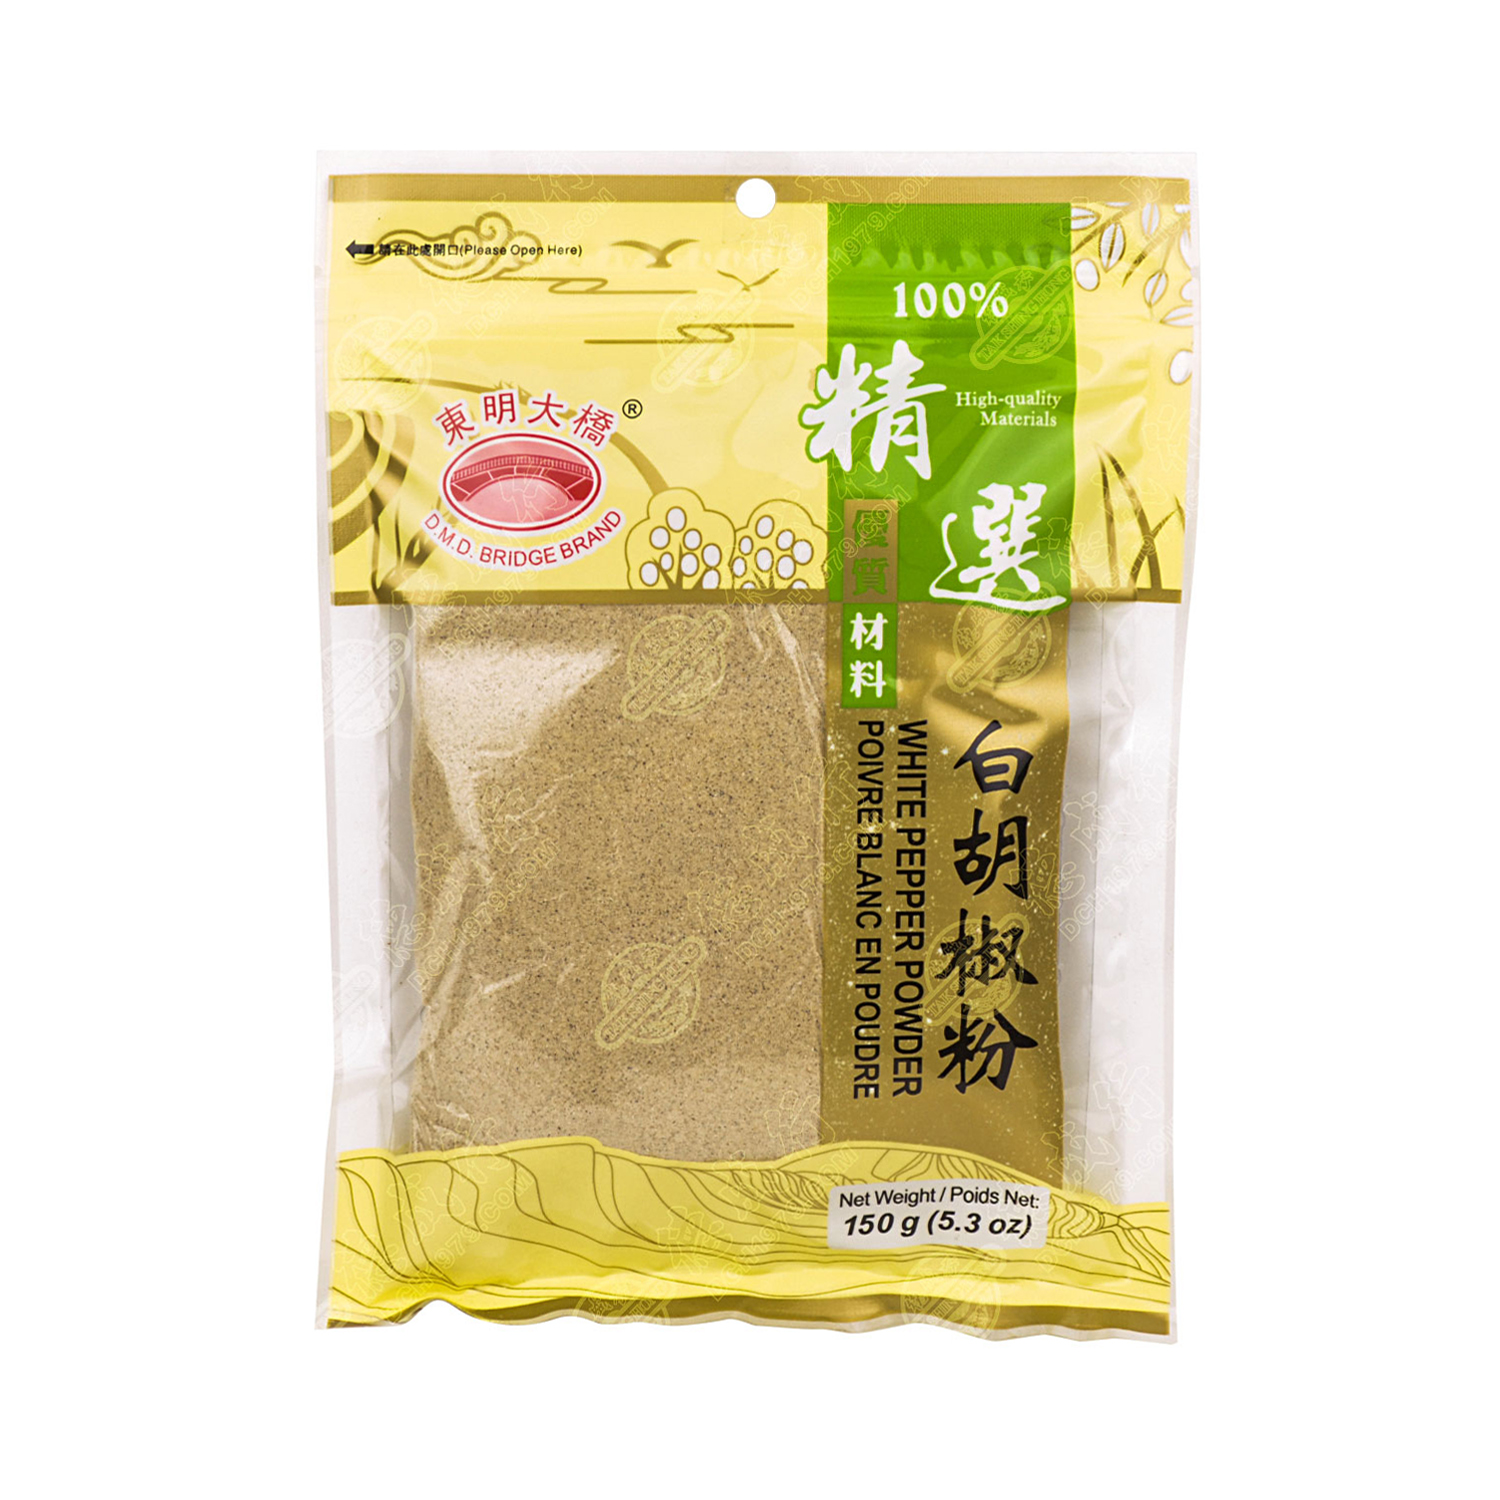 FG01. 小磨坊純正白胡椒粉 - Bala Foods